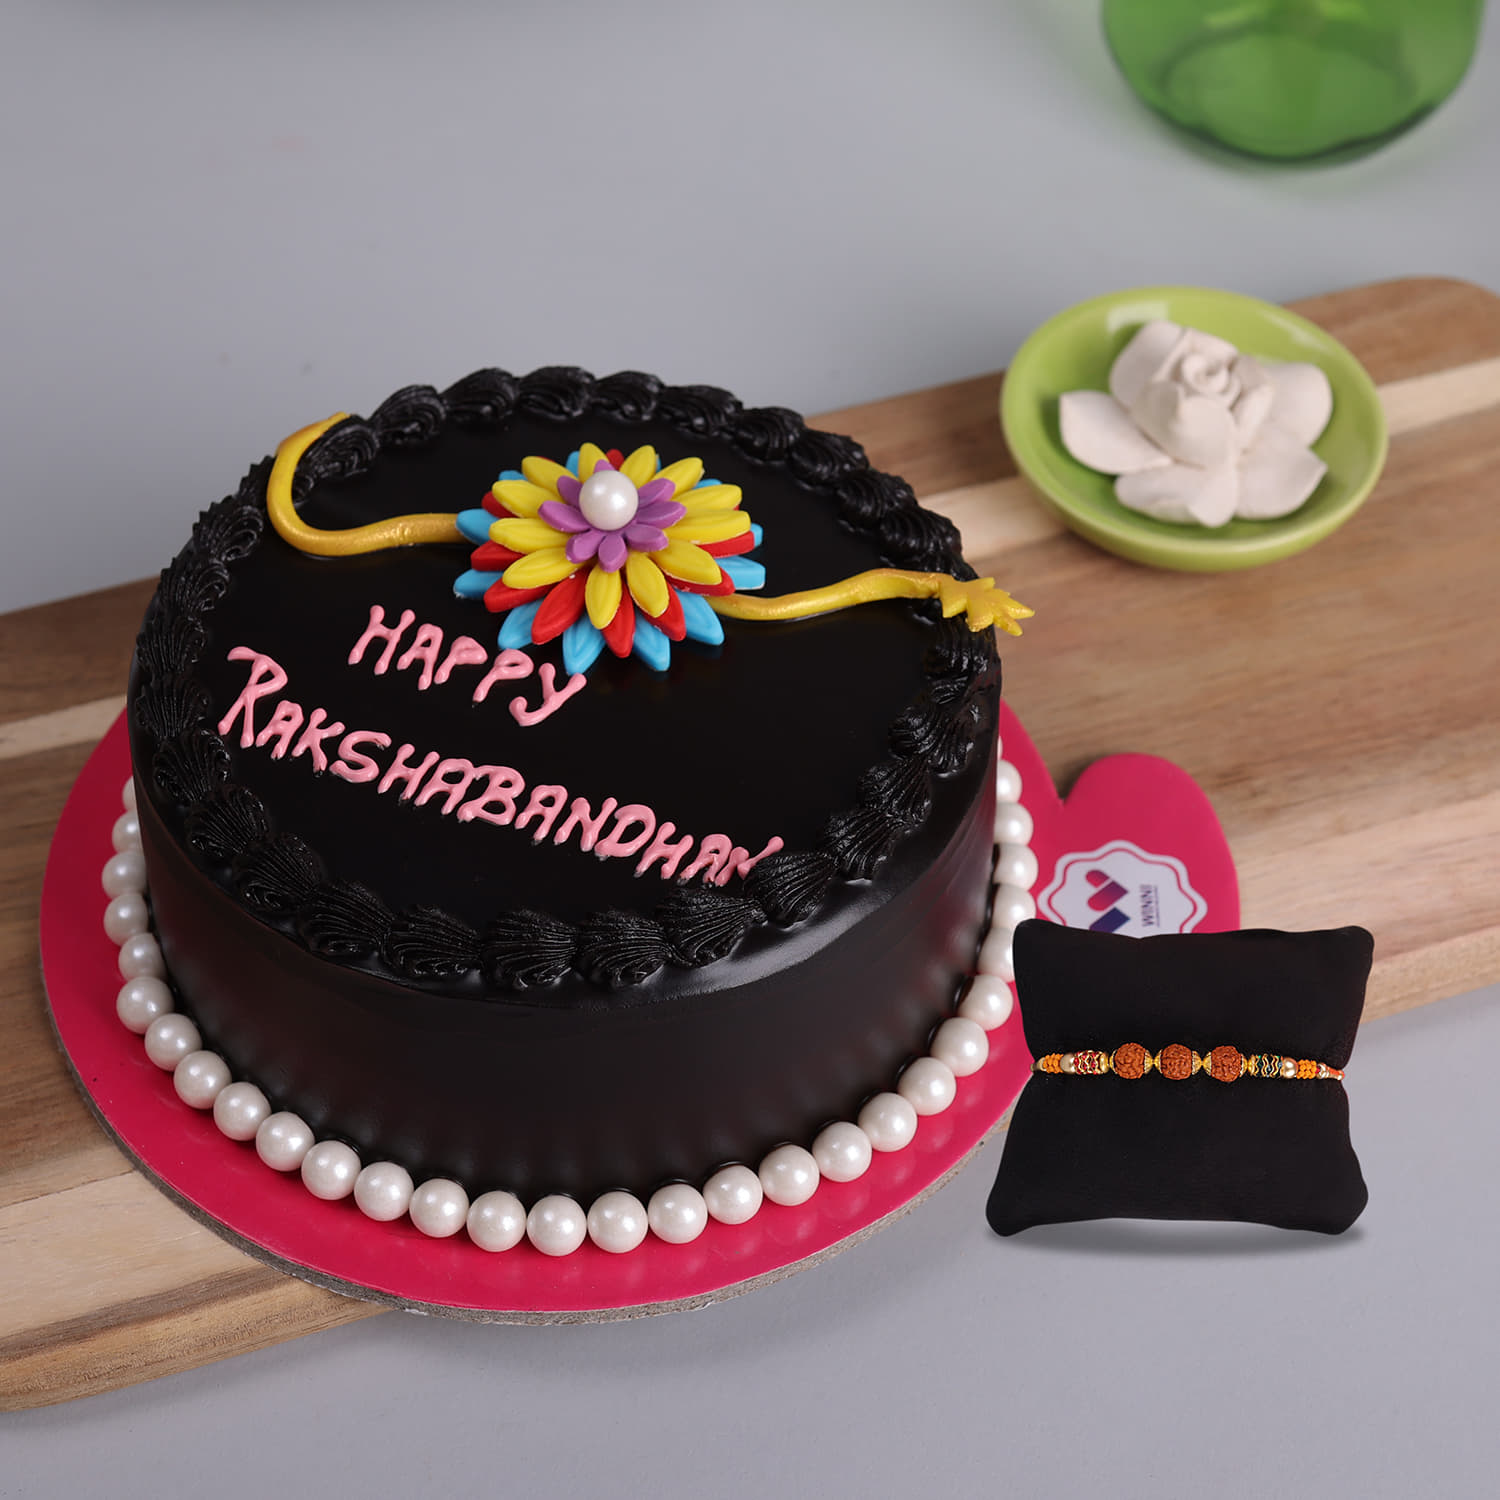 Chef Bhakti Arora Manekar - A simple rakshabandhan special cake 😁 . . #cake  #rakshabandan #rakhi #rakshabandhanspecial #rakshabandhangifts  #indianfestival #brother #sister #cakeartist #instacake #cakesofinstagram  #cakesoninstagram #masterchefindia ...